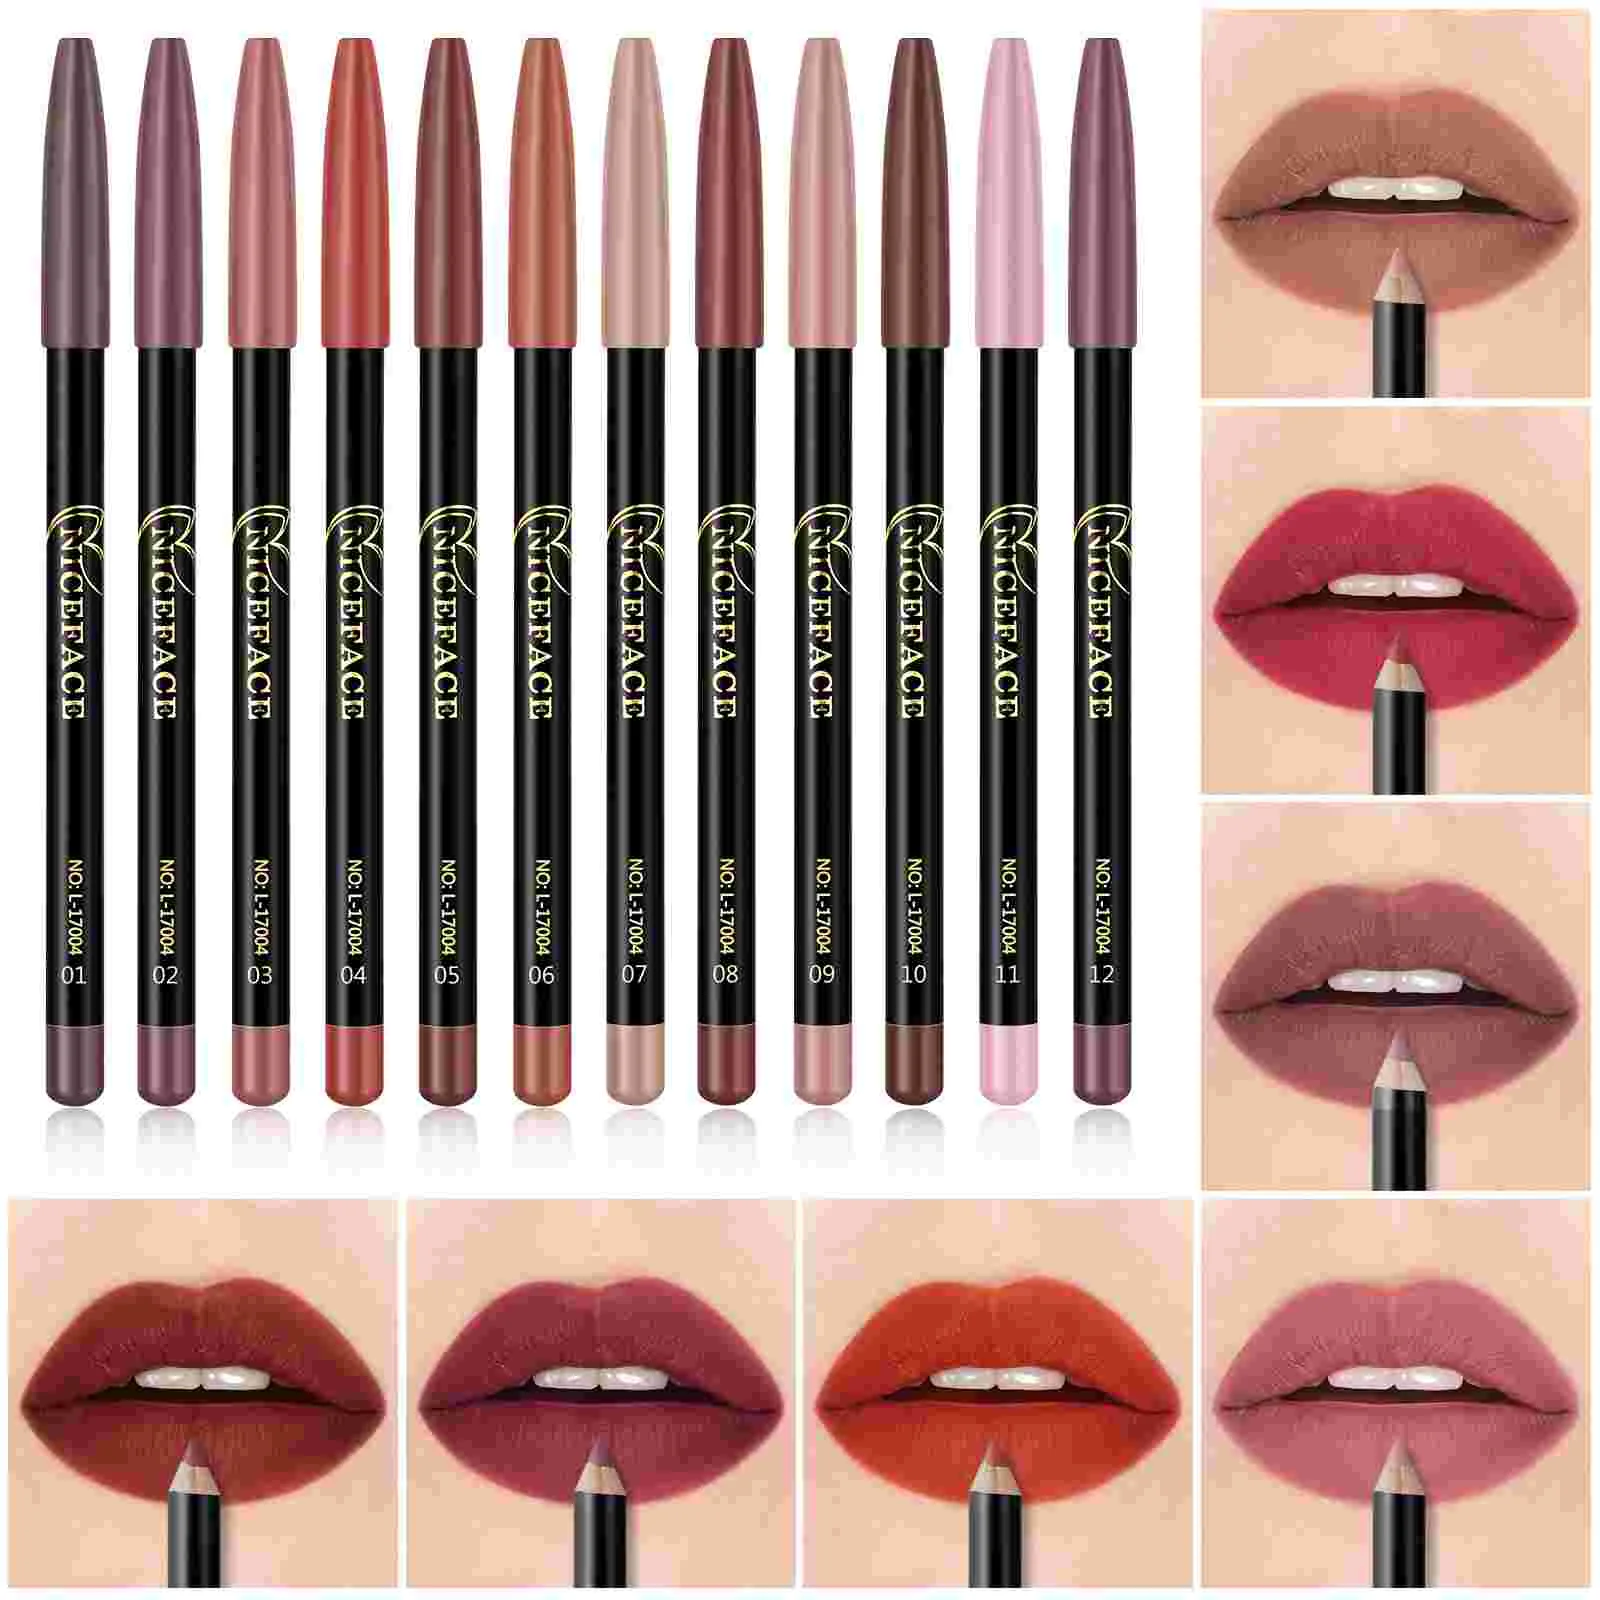 

Lips Miss Lipstick Long Lasting Matte Lip Liner Set Natural Lipliners Wooden Waterproof Pencils